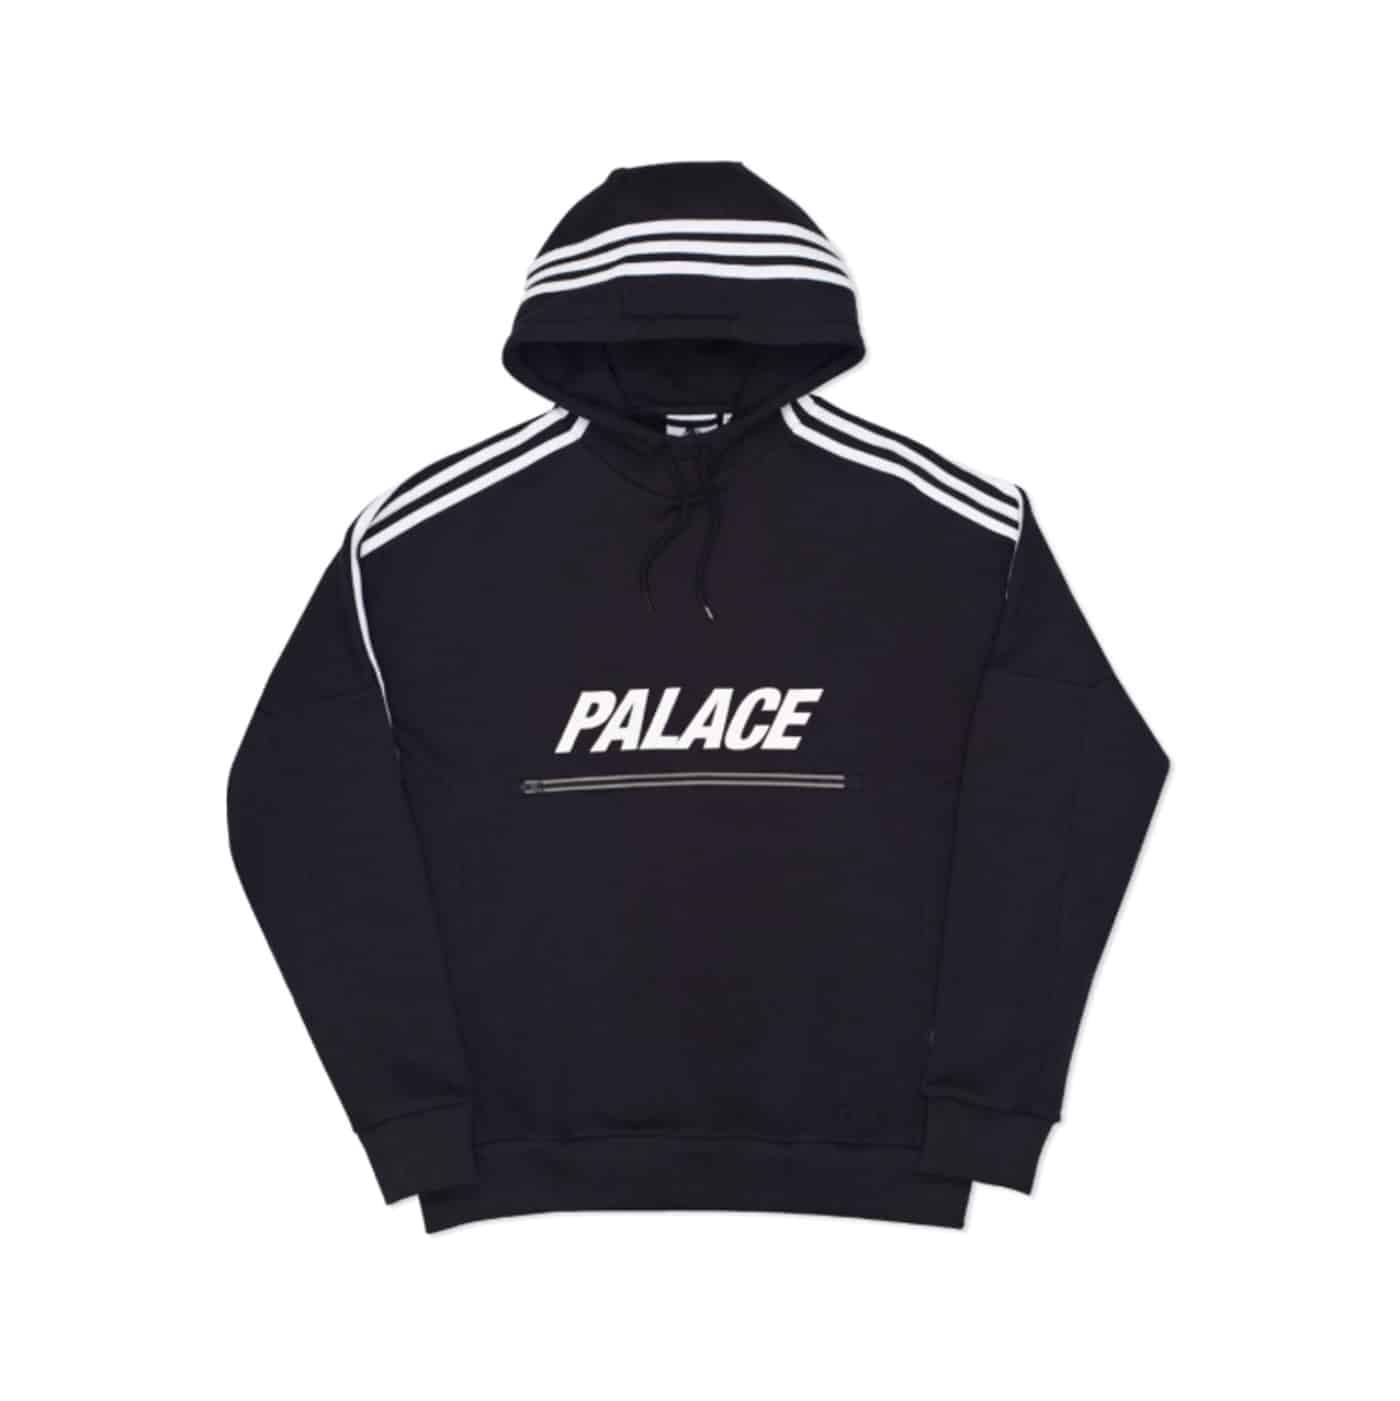 Palace x Adidas Track Top Hoodie Black/White Palace